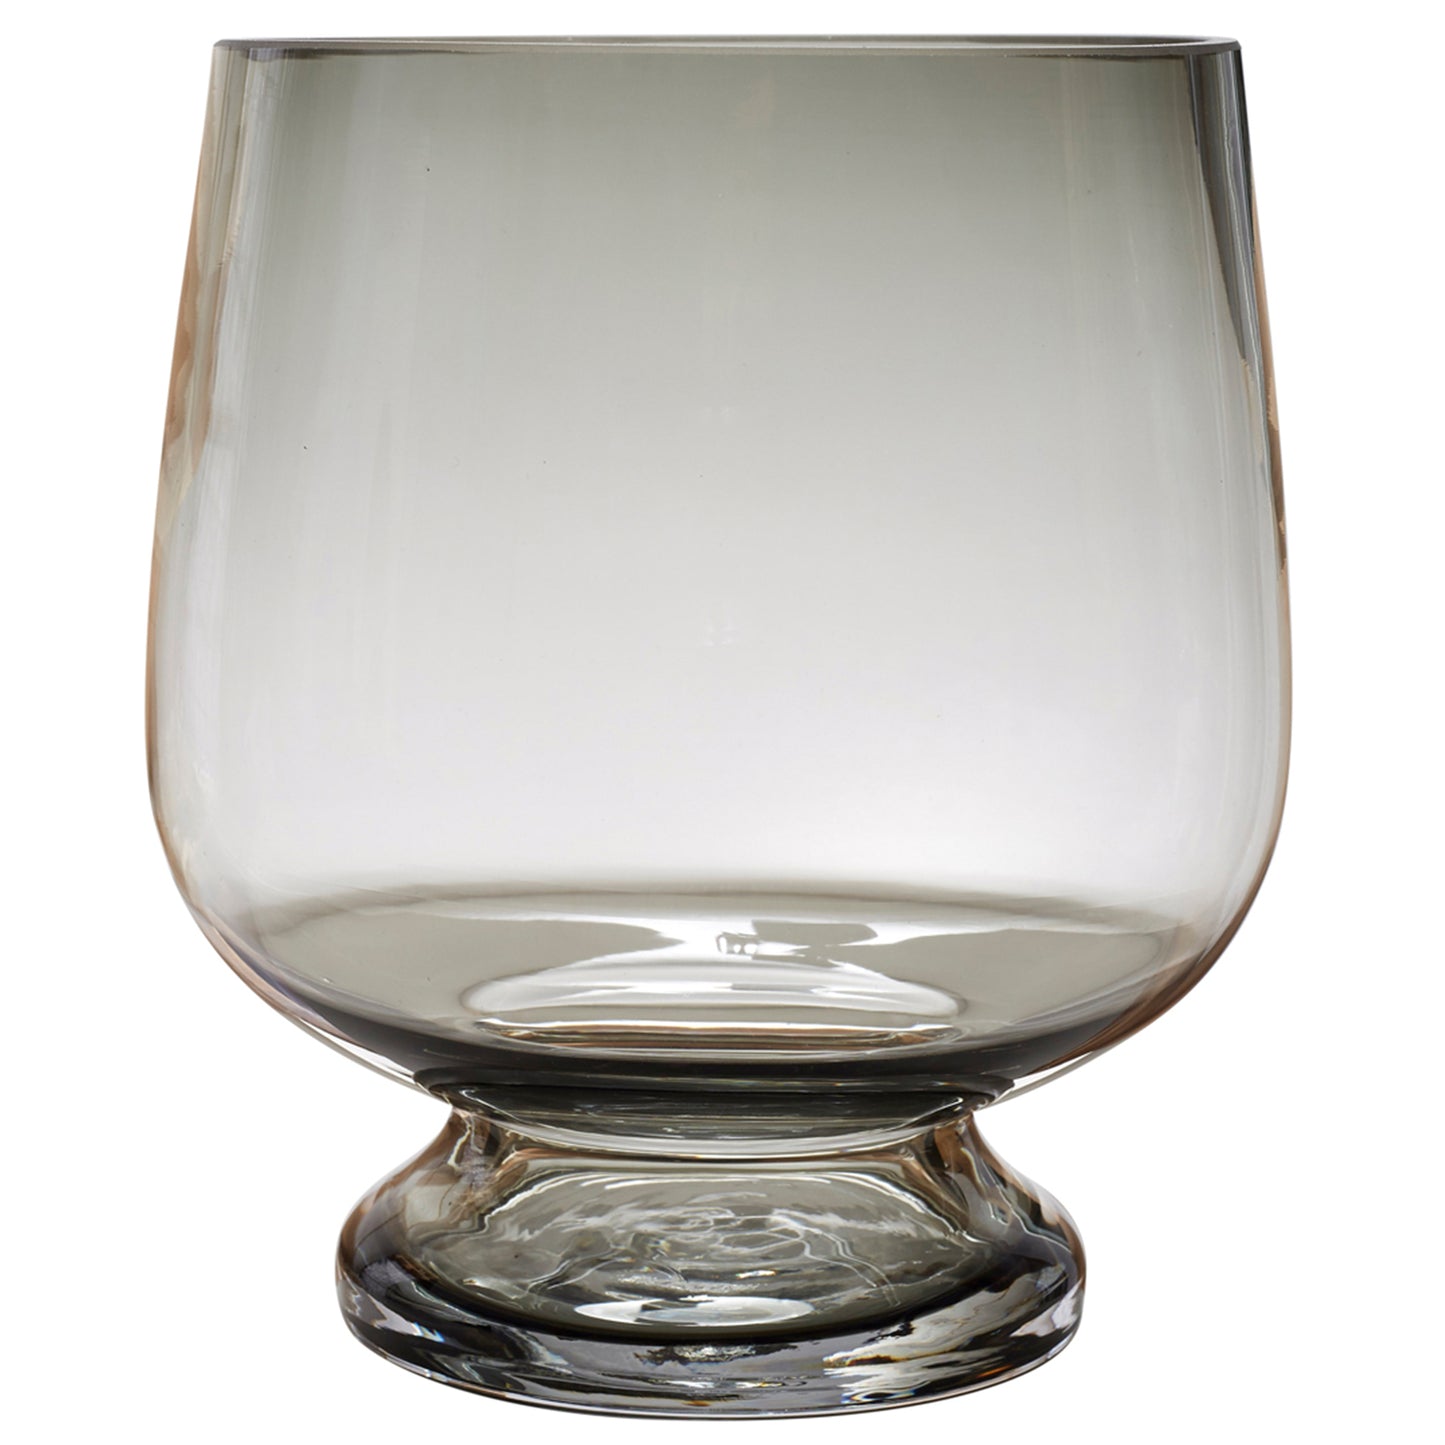 Windlichtglas "Hanami" mit Fuß, Ø 18 x H 20cm, rauchgrau